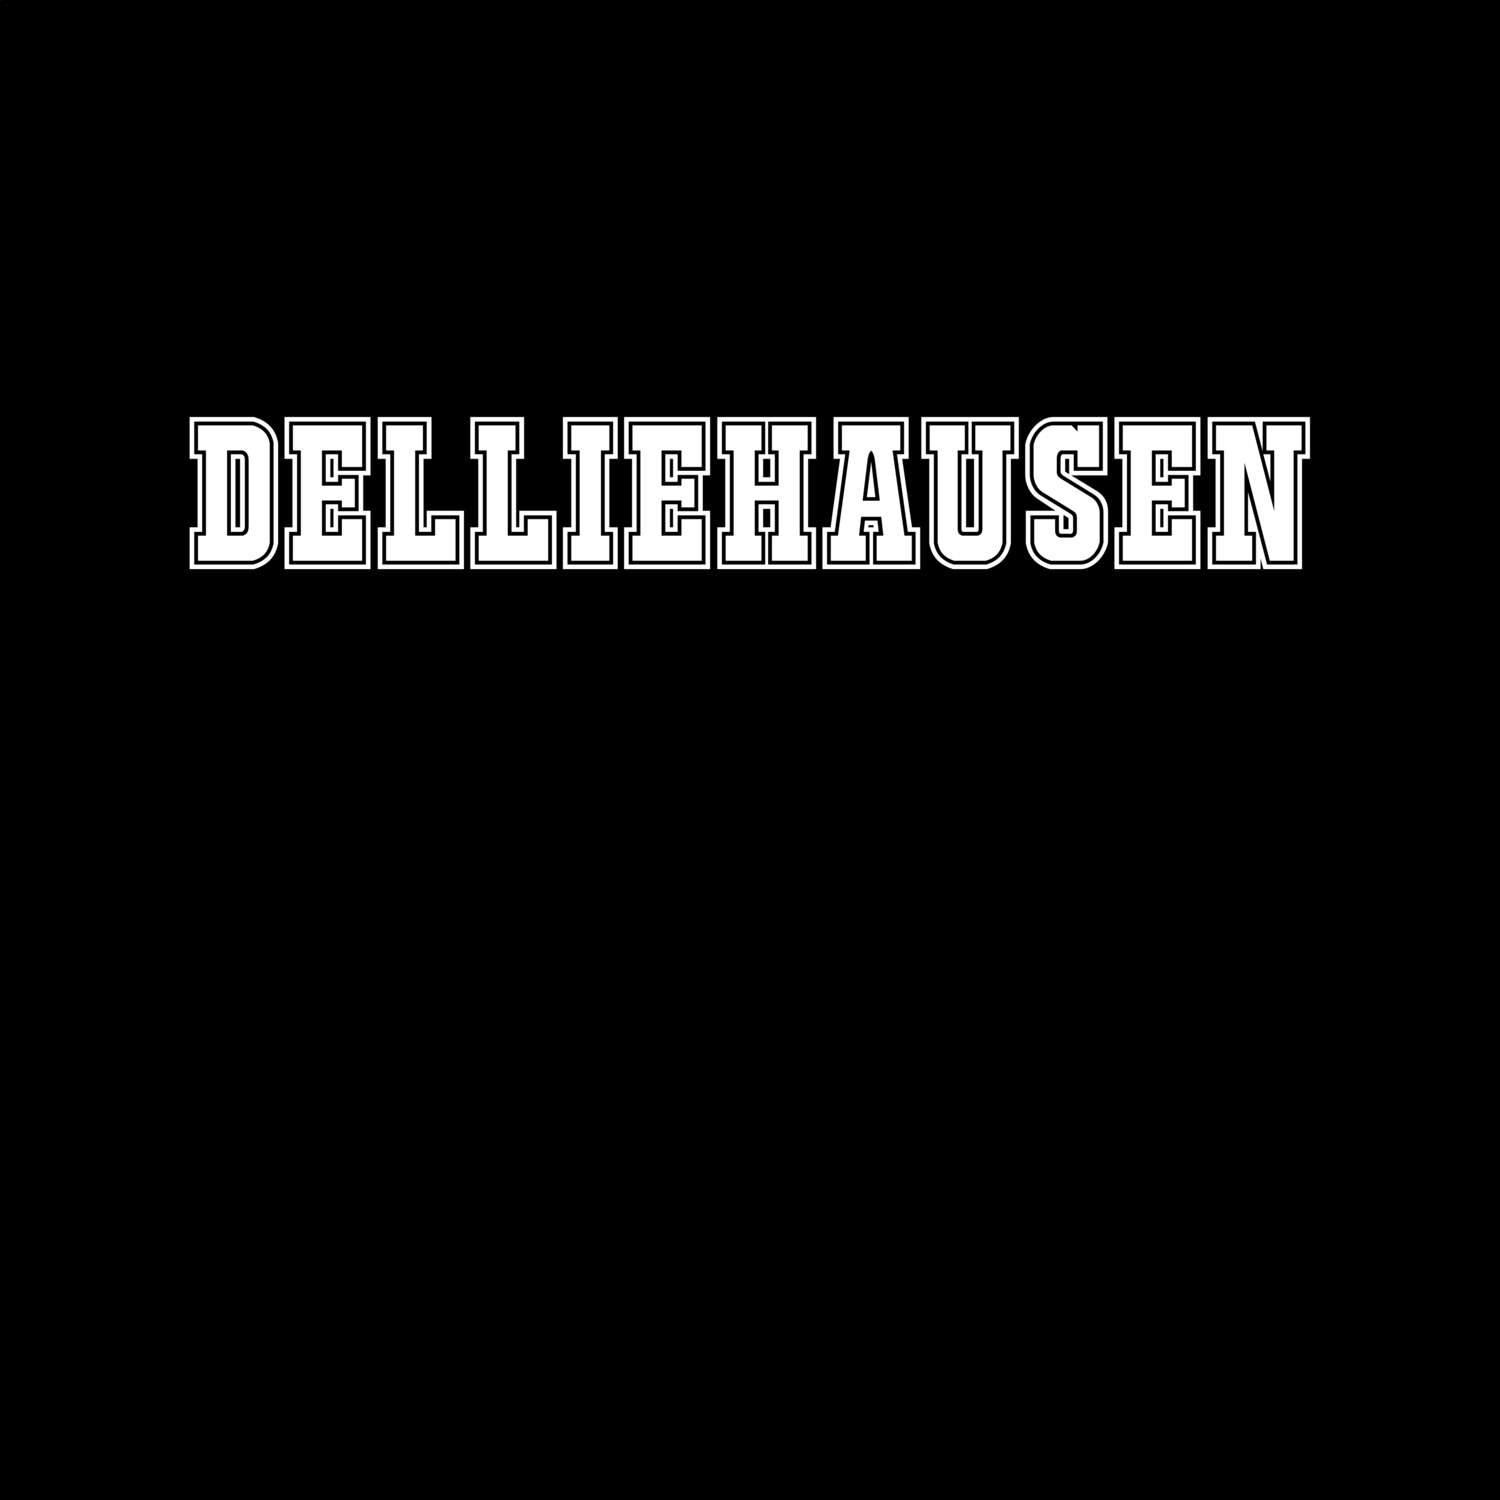 Delliehausen T-Shirt »Classic«